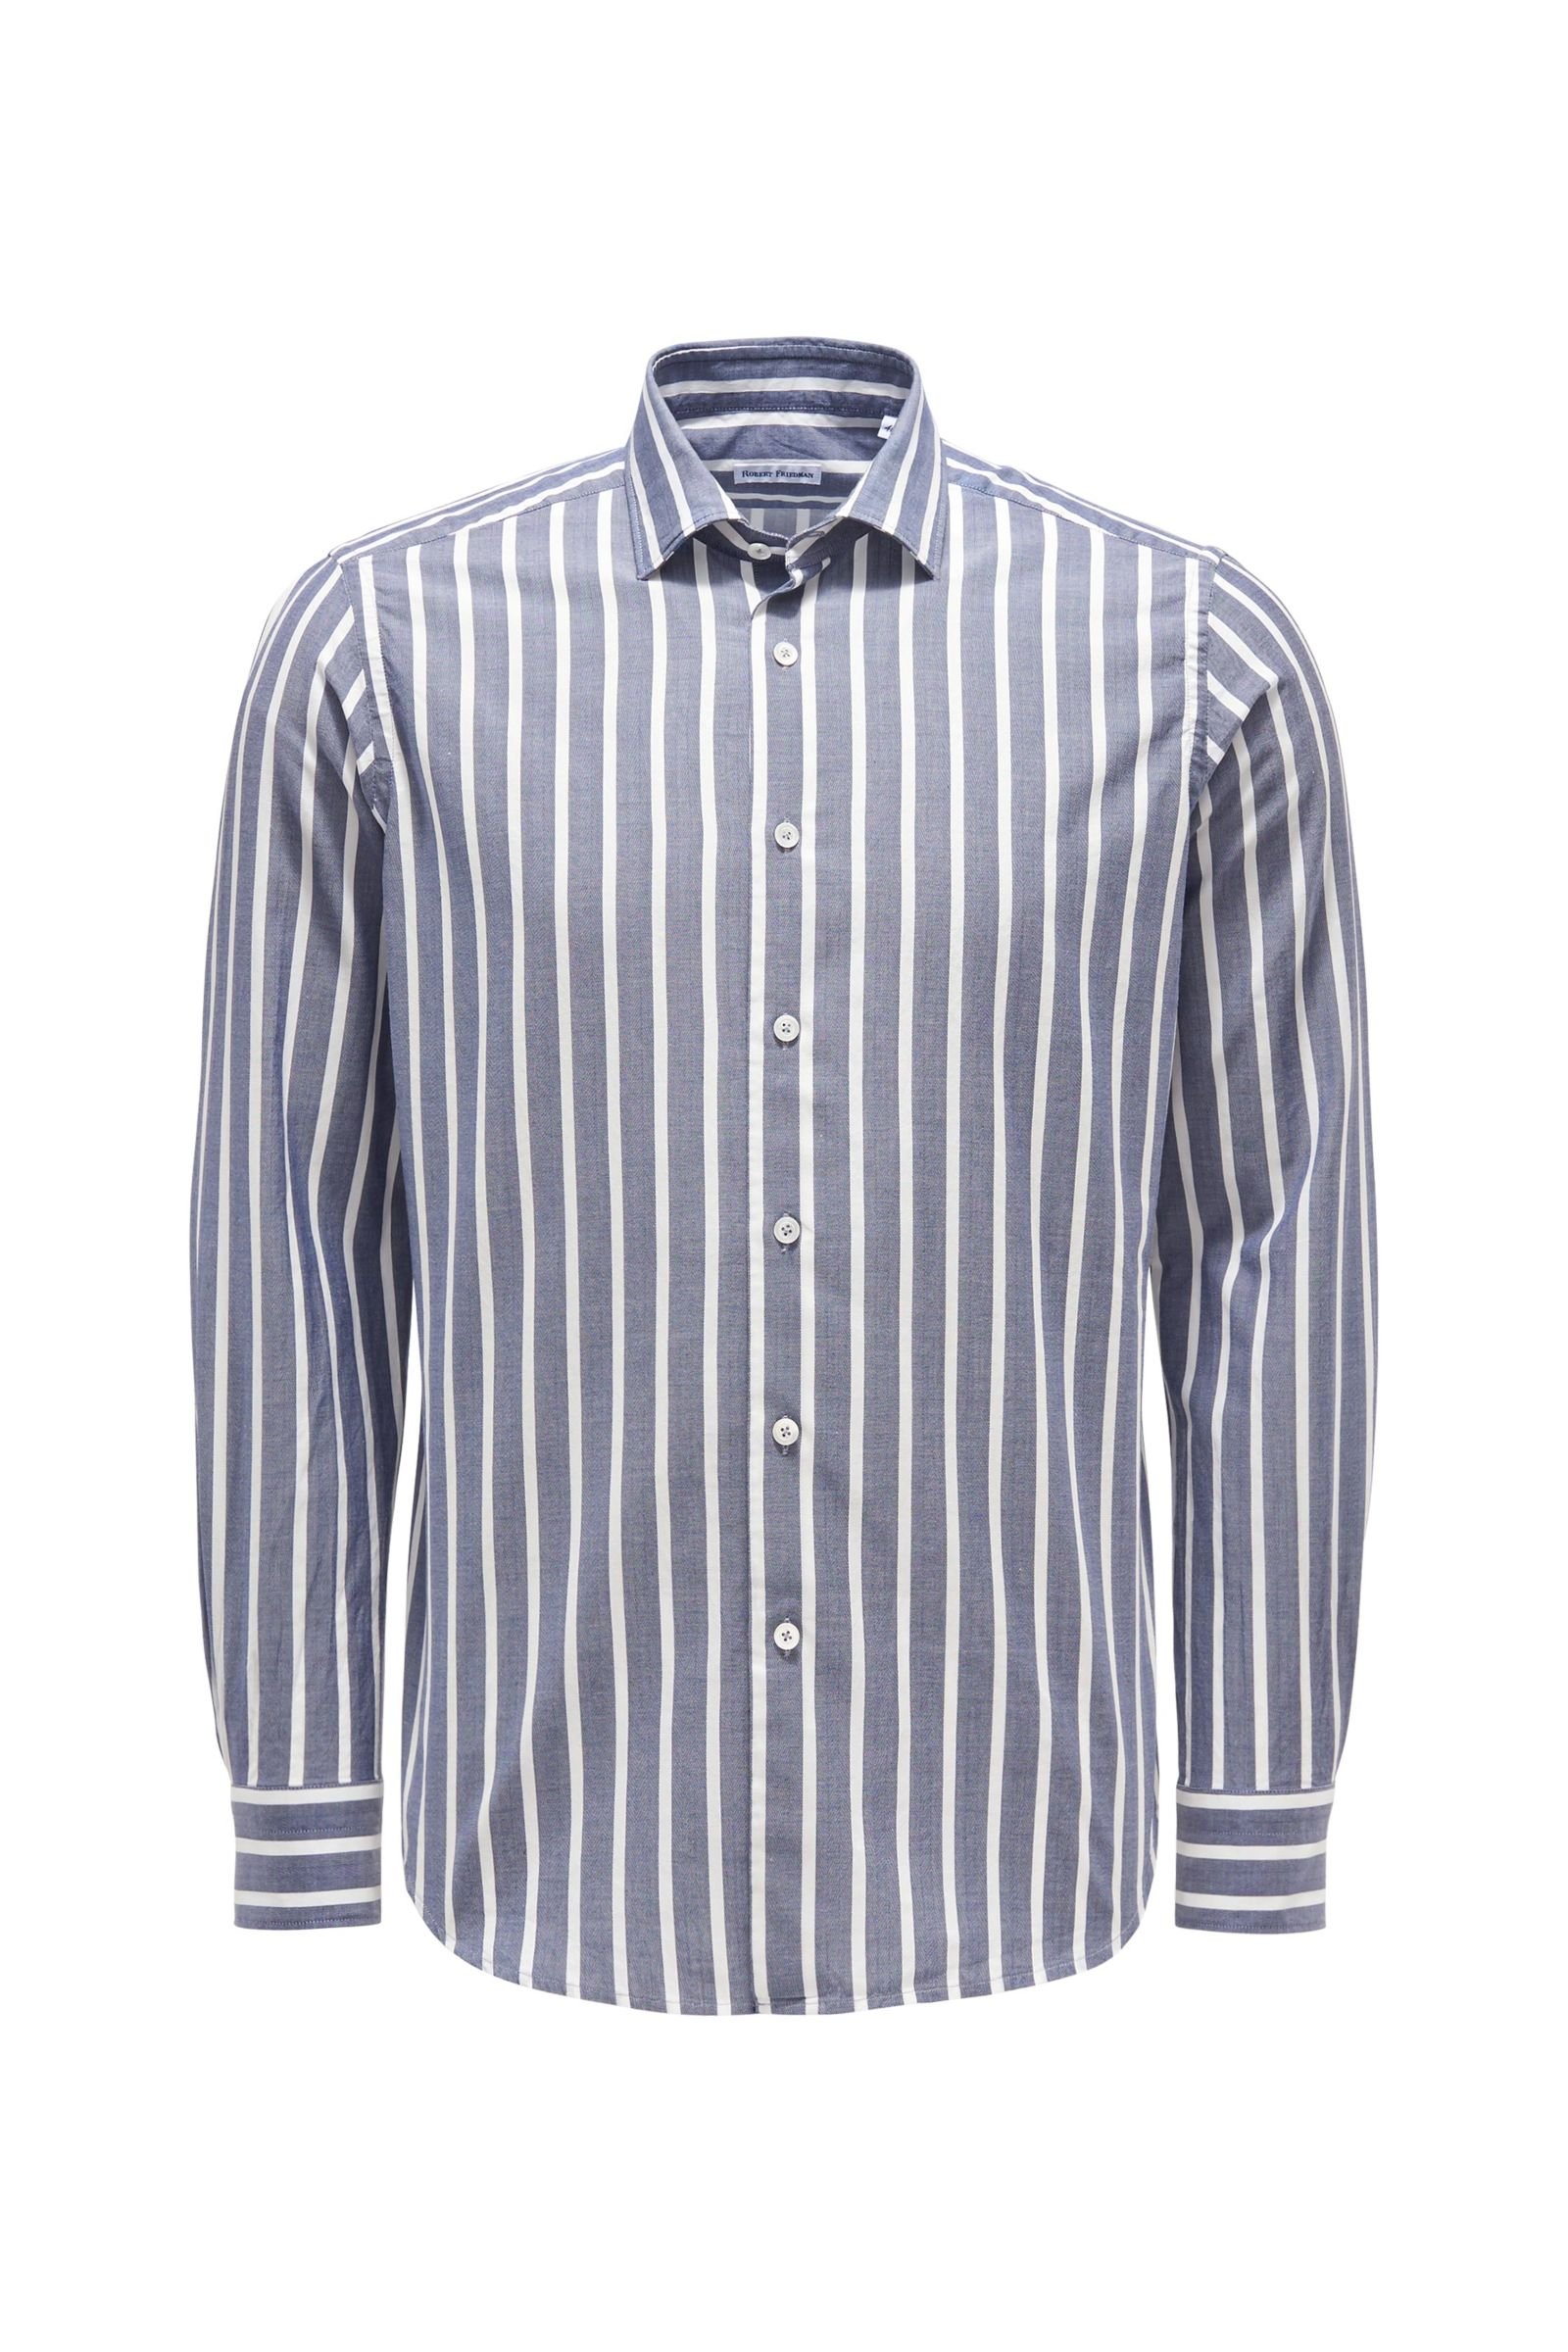 Casual shirt 'Leo' narrow collar grey-blue/white striped